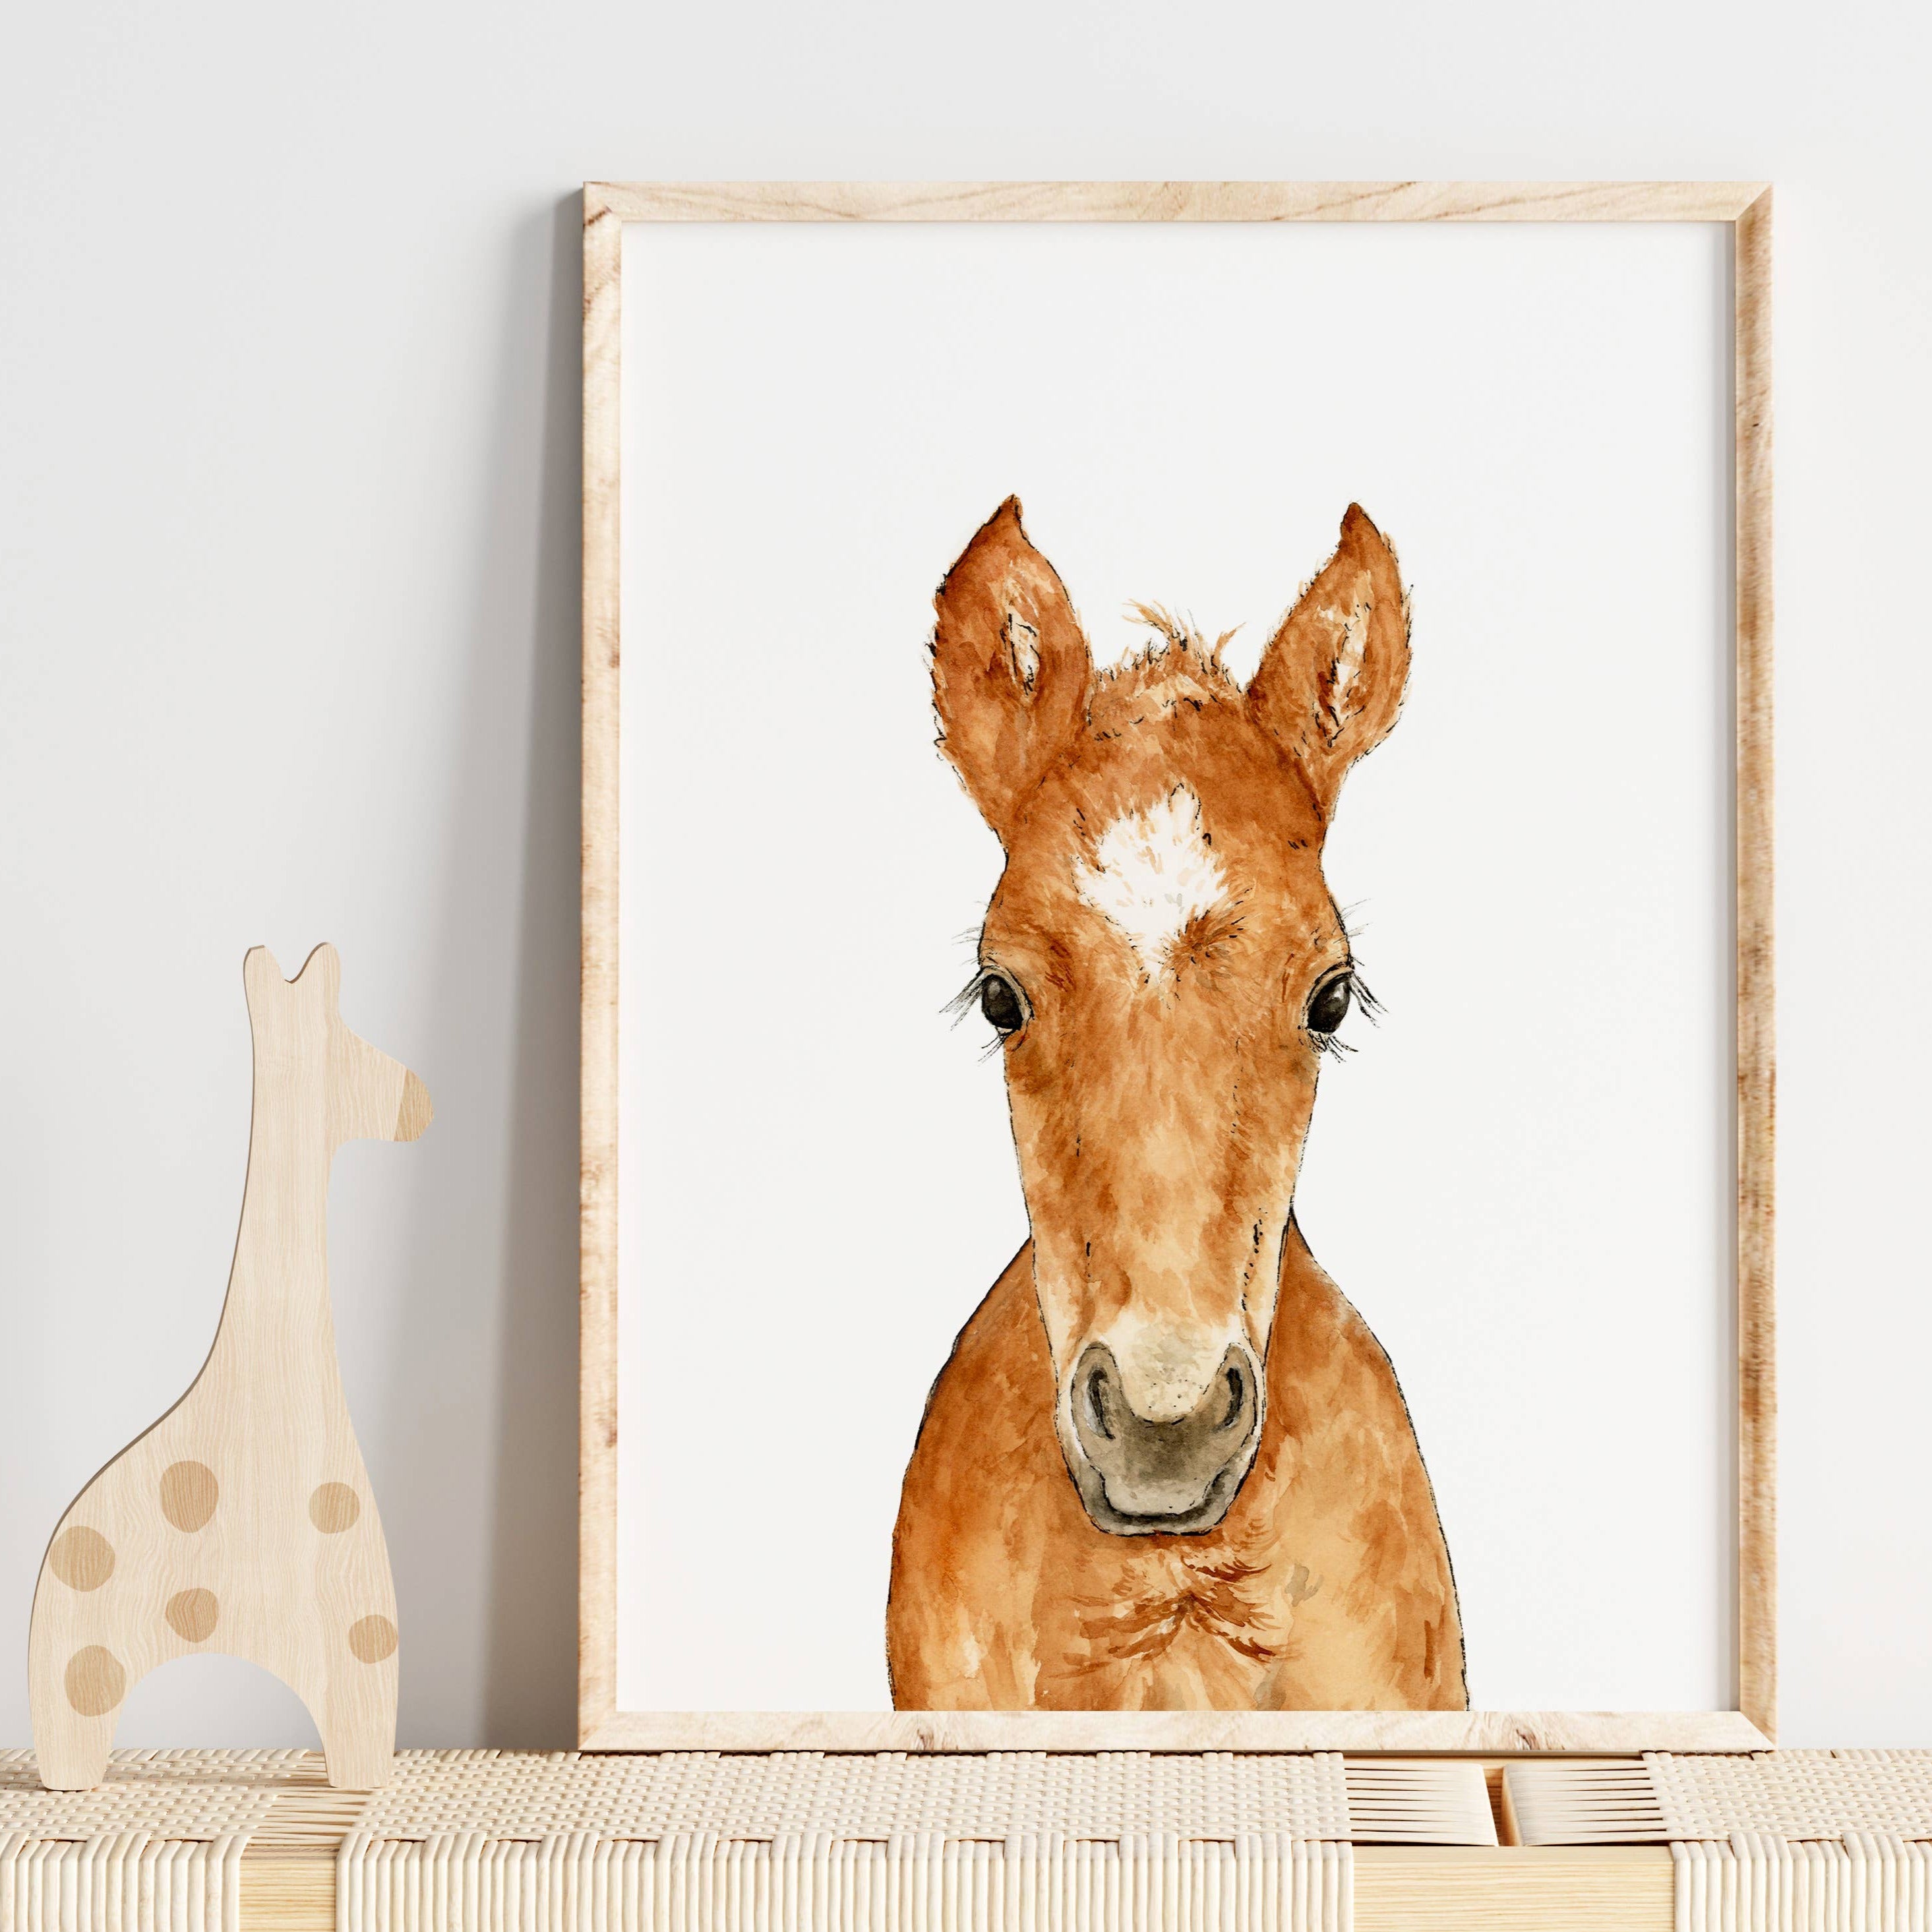 Horse Art Print